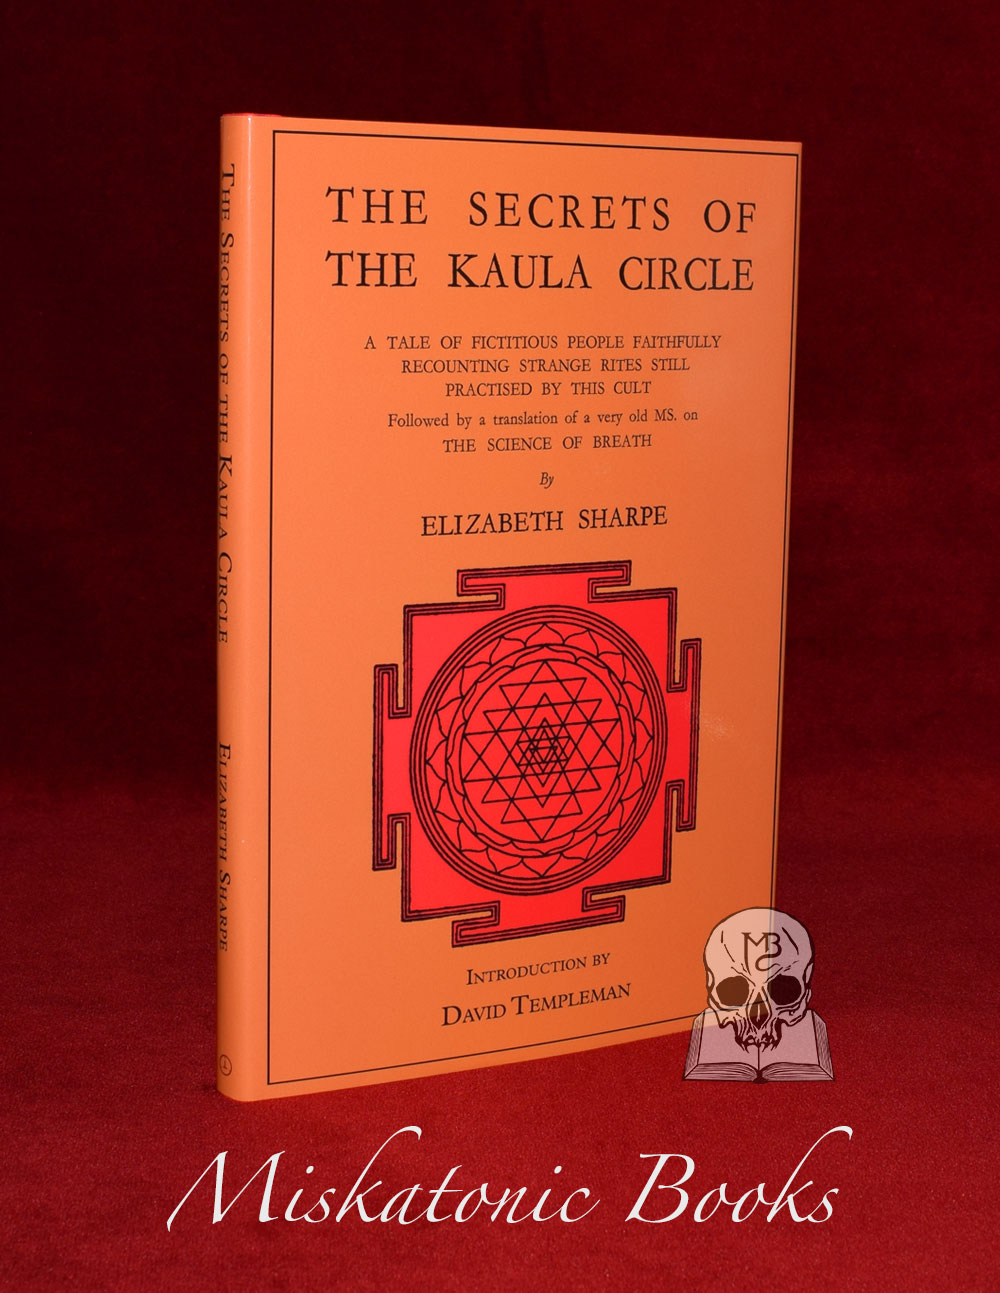 THE SECRETS OF THE KAULA CIRCLE by Elizabeth Sharpe - Signed Limited Edition Hardcover